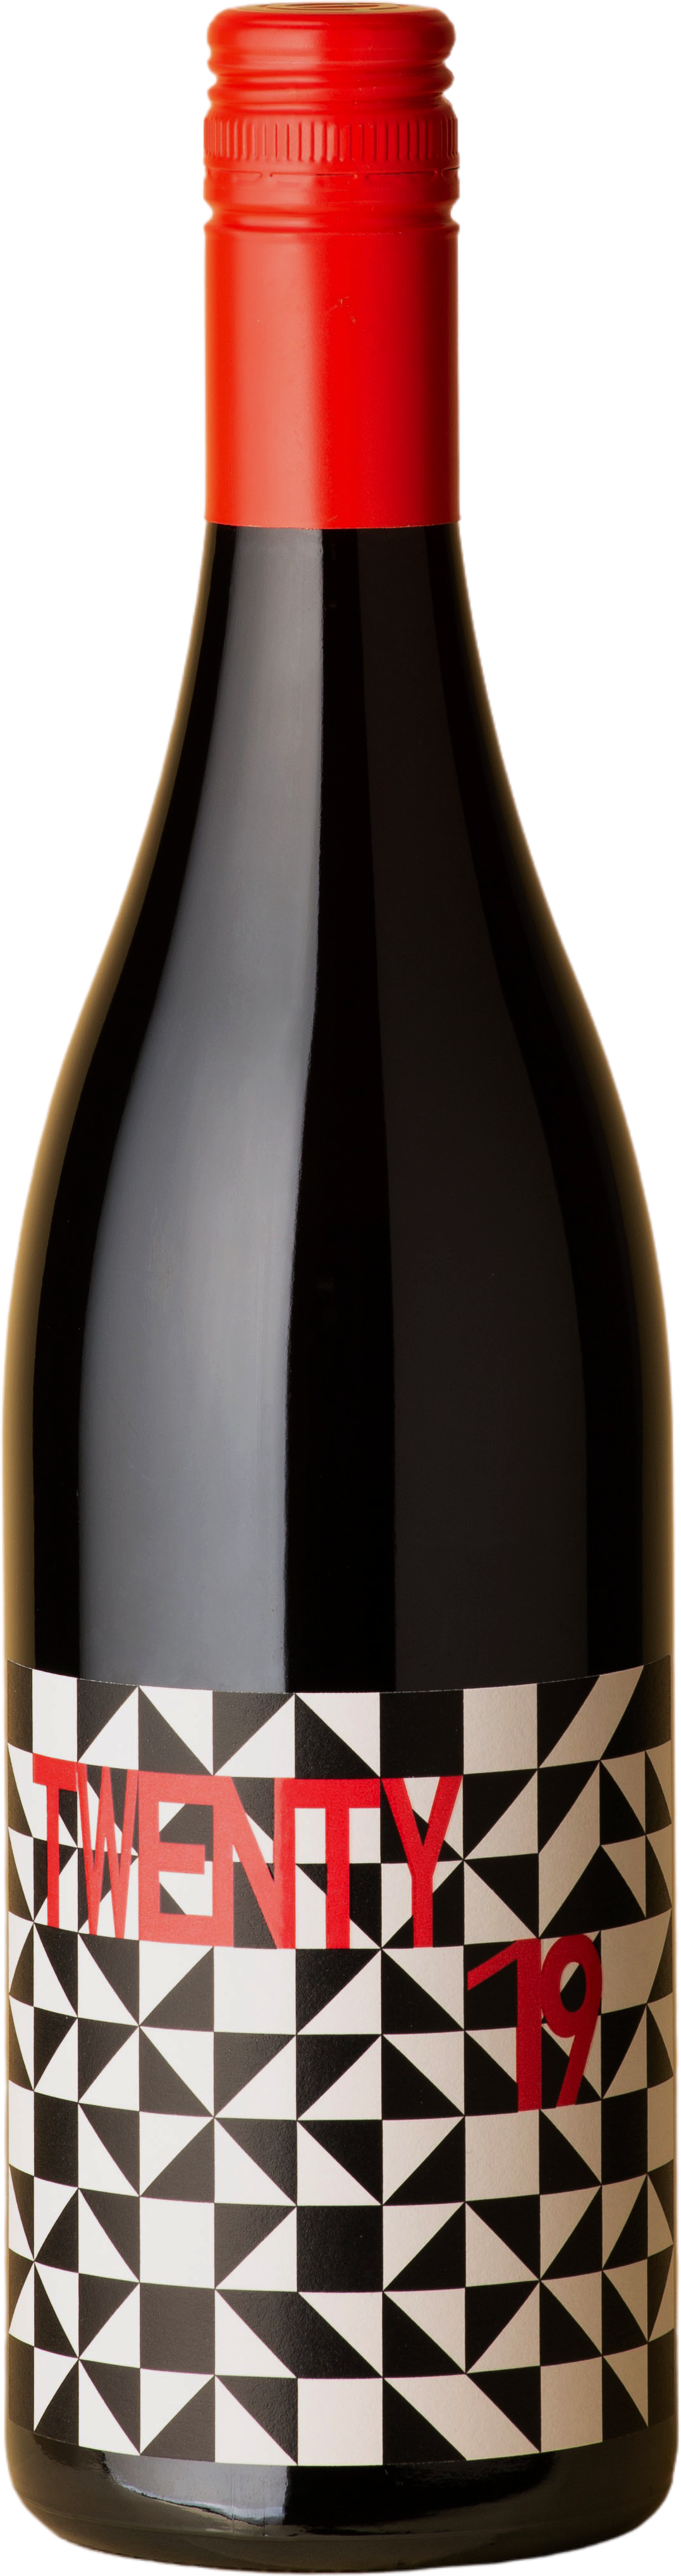 Glaetzer-Dixon - Tasmania Nouveau Pinot Noir 2019 Red Wine